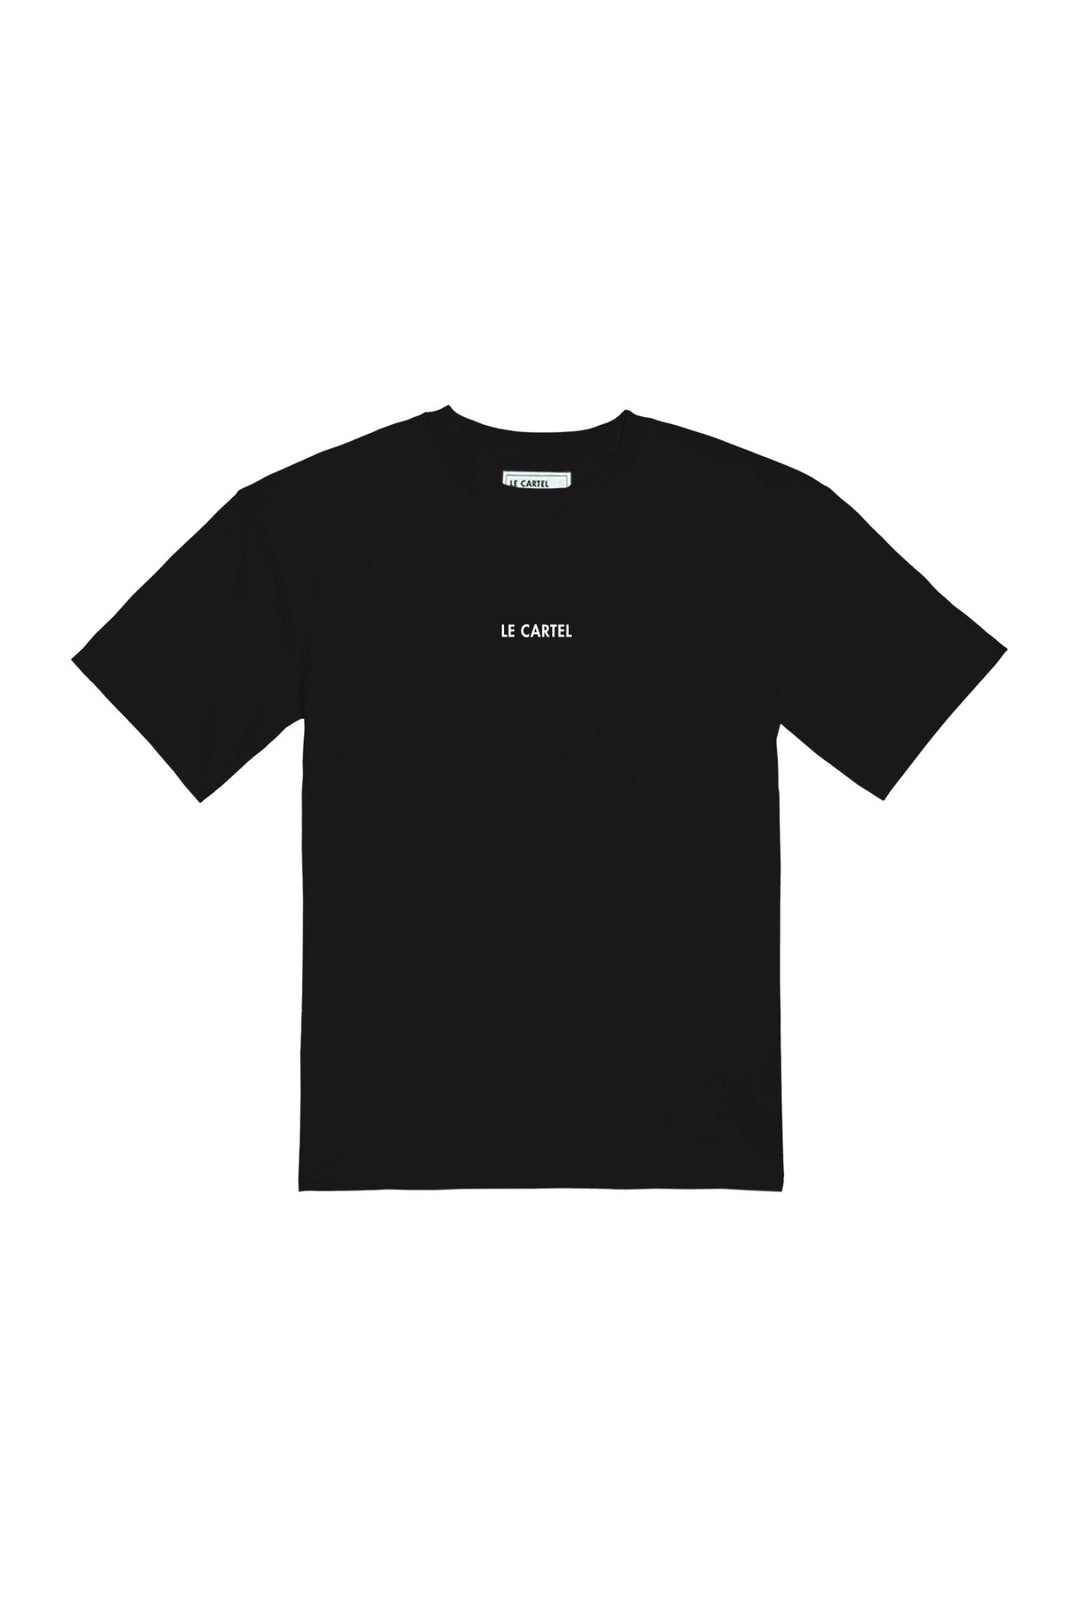 FRENCH PANPAN・T-shirt unisexe・Noir - Le Cartel